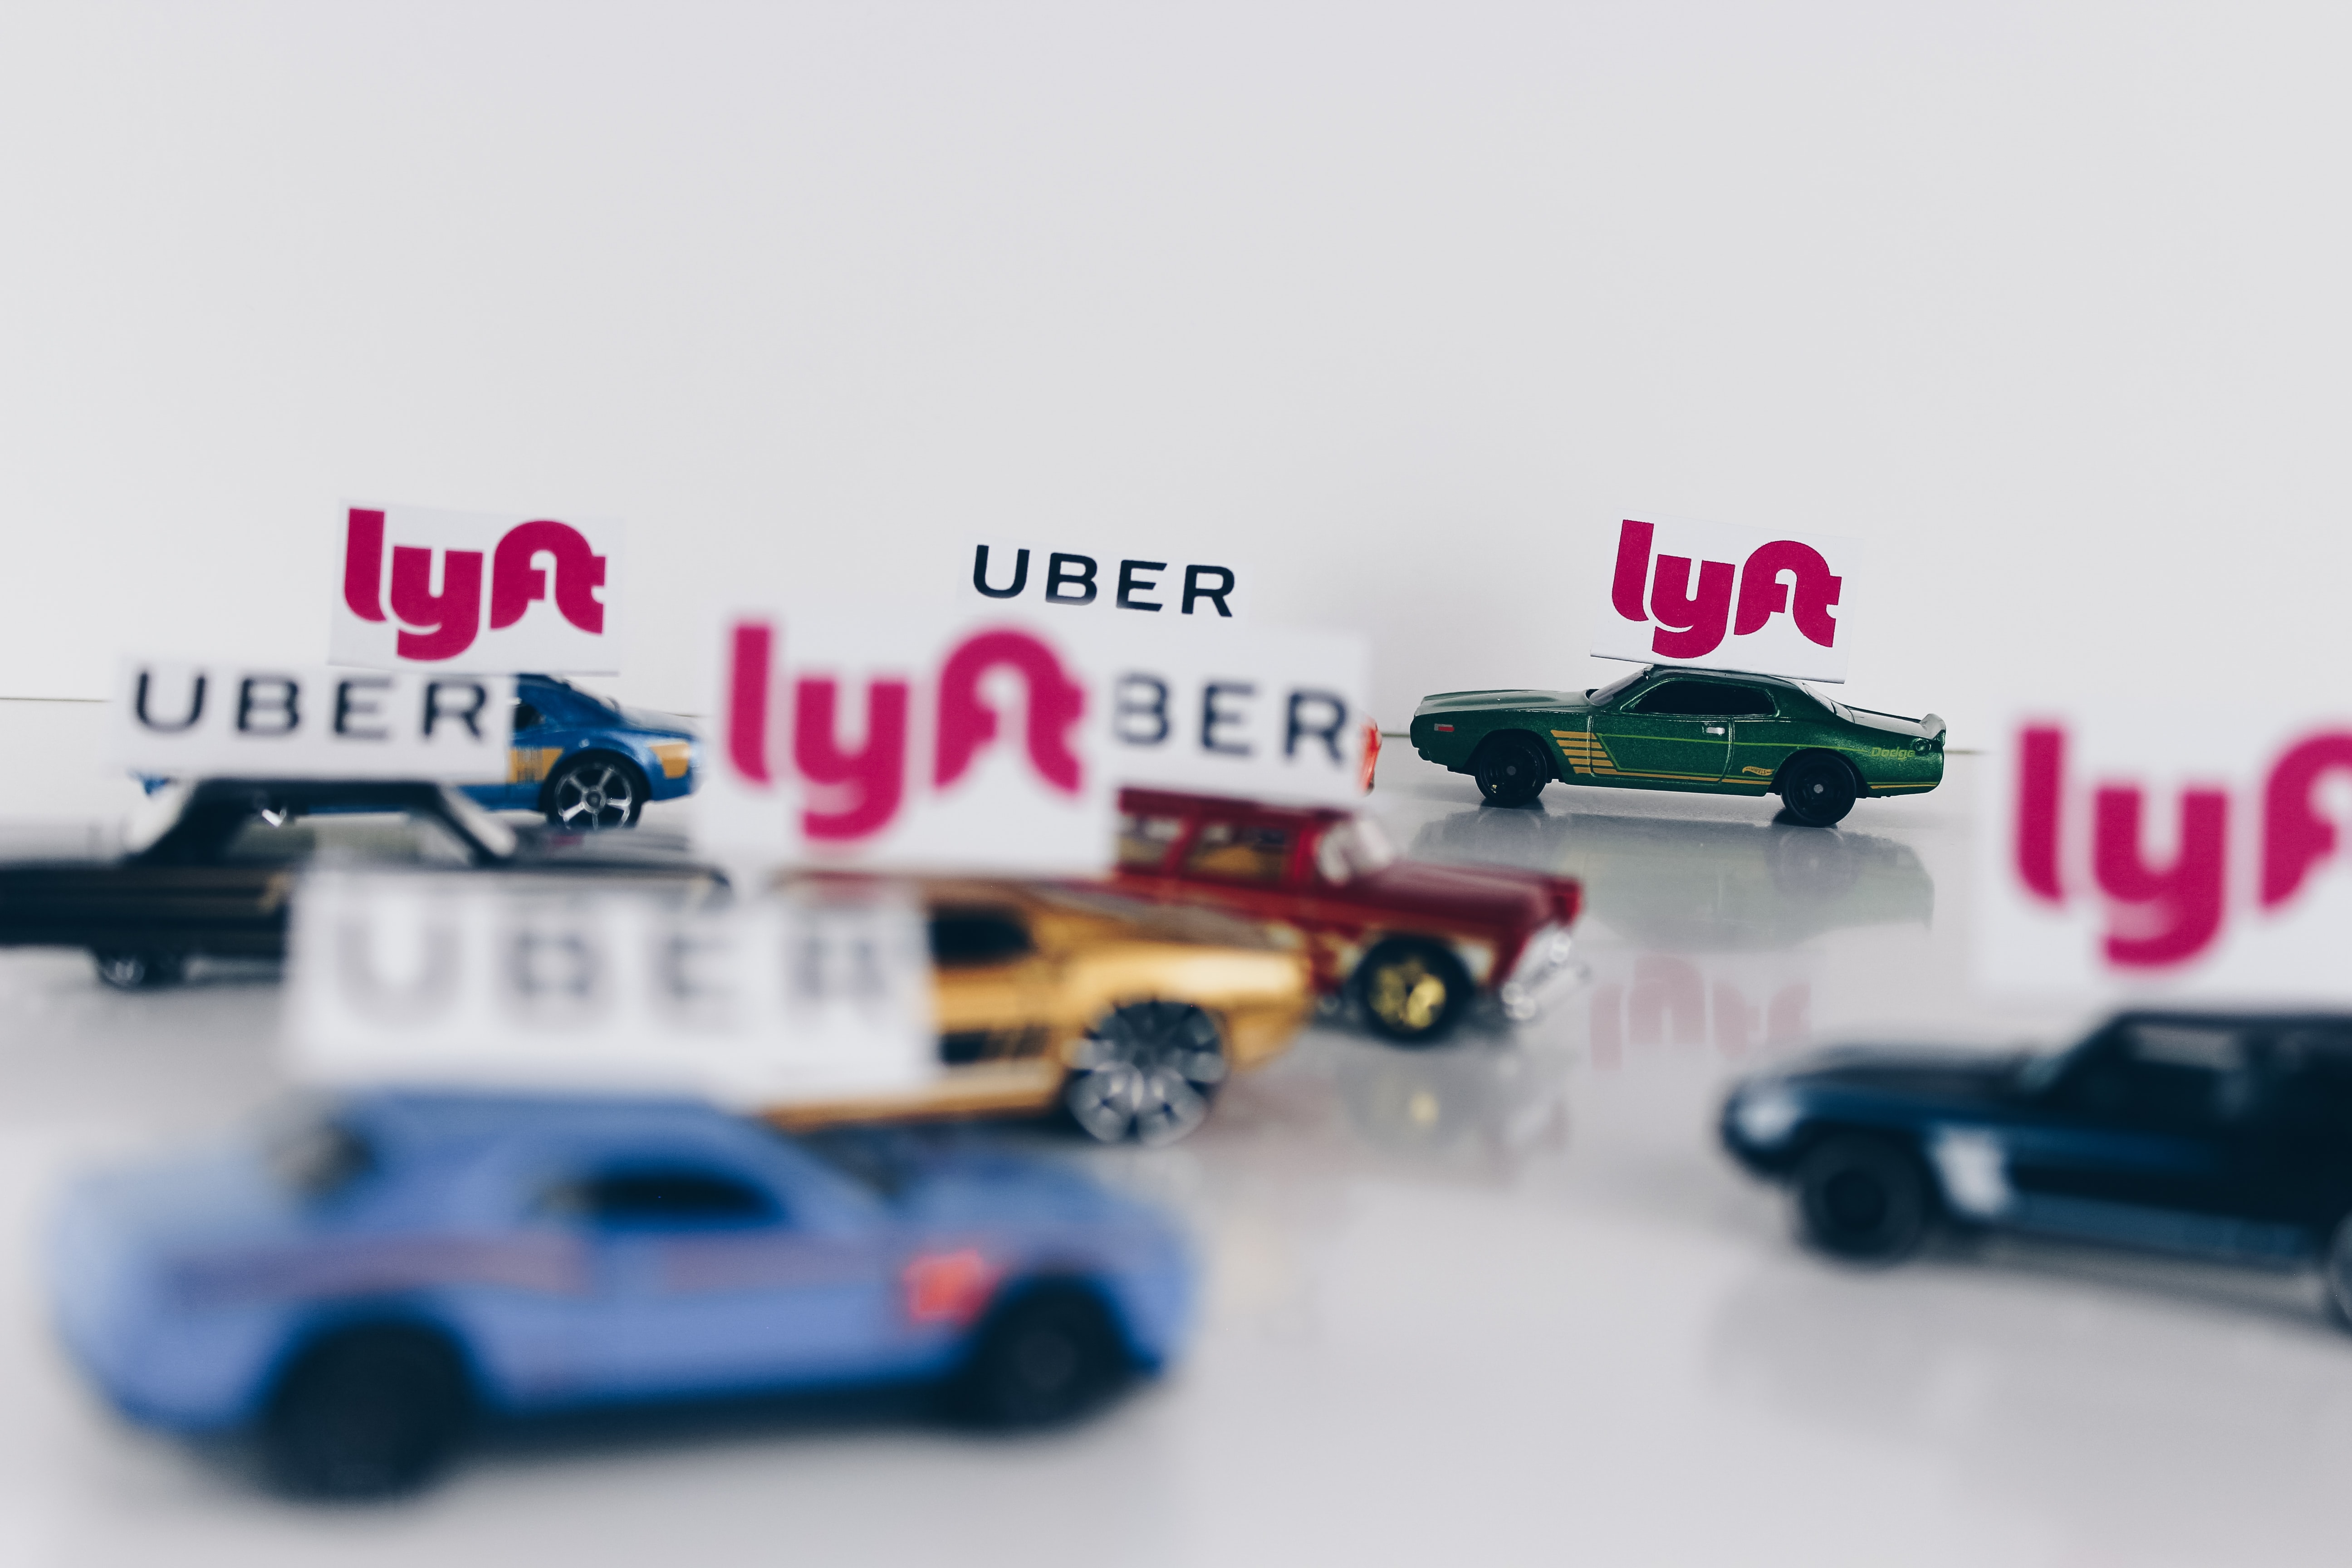 Ubers and Lyfts